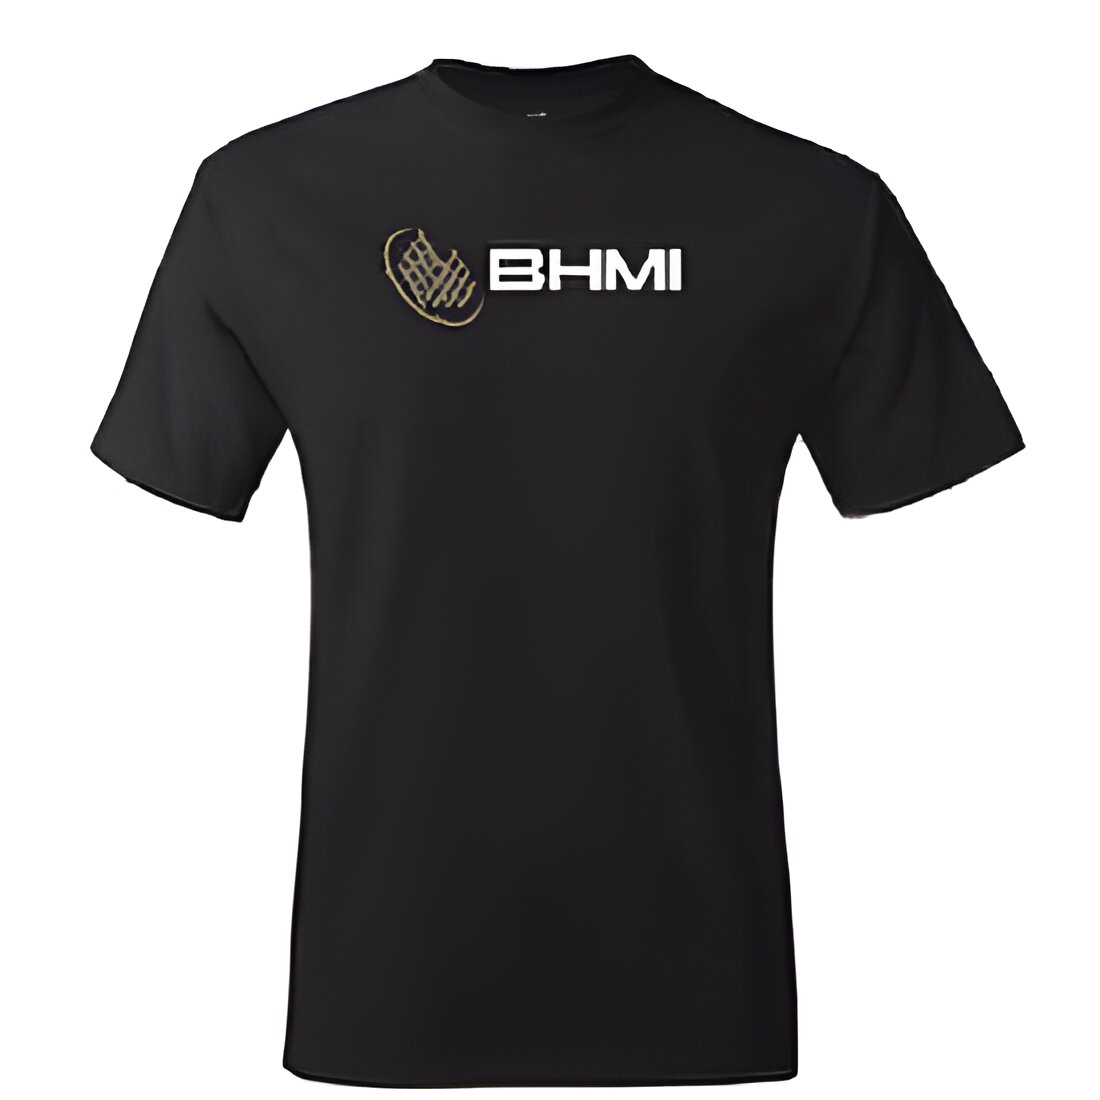 Free BHMI T-Shirt